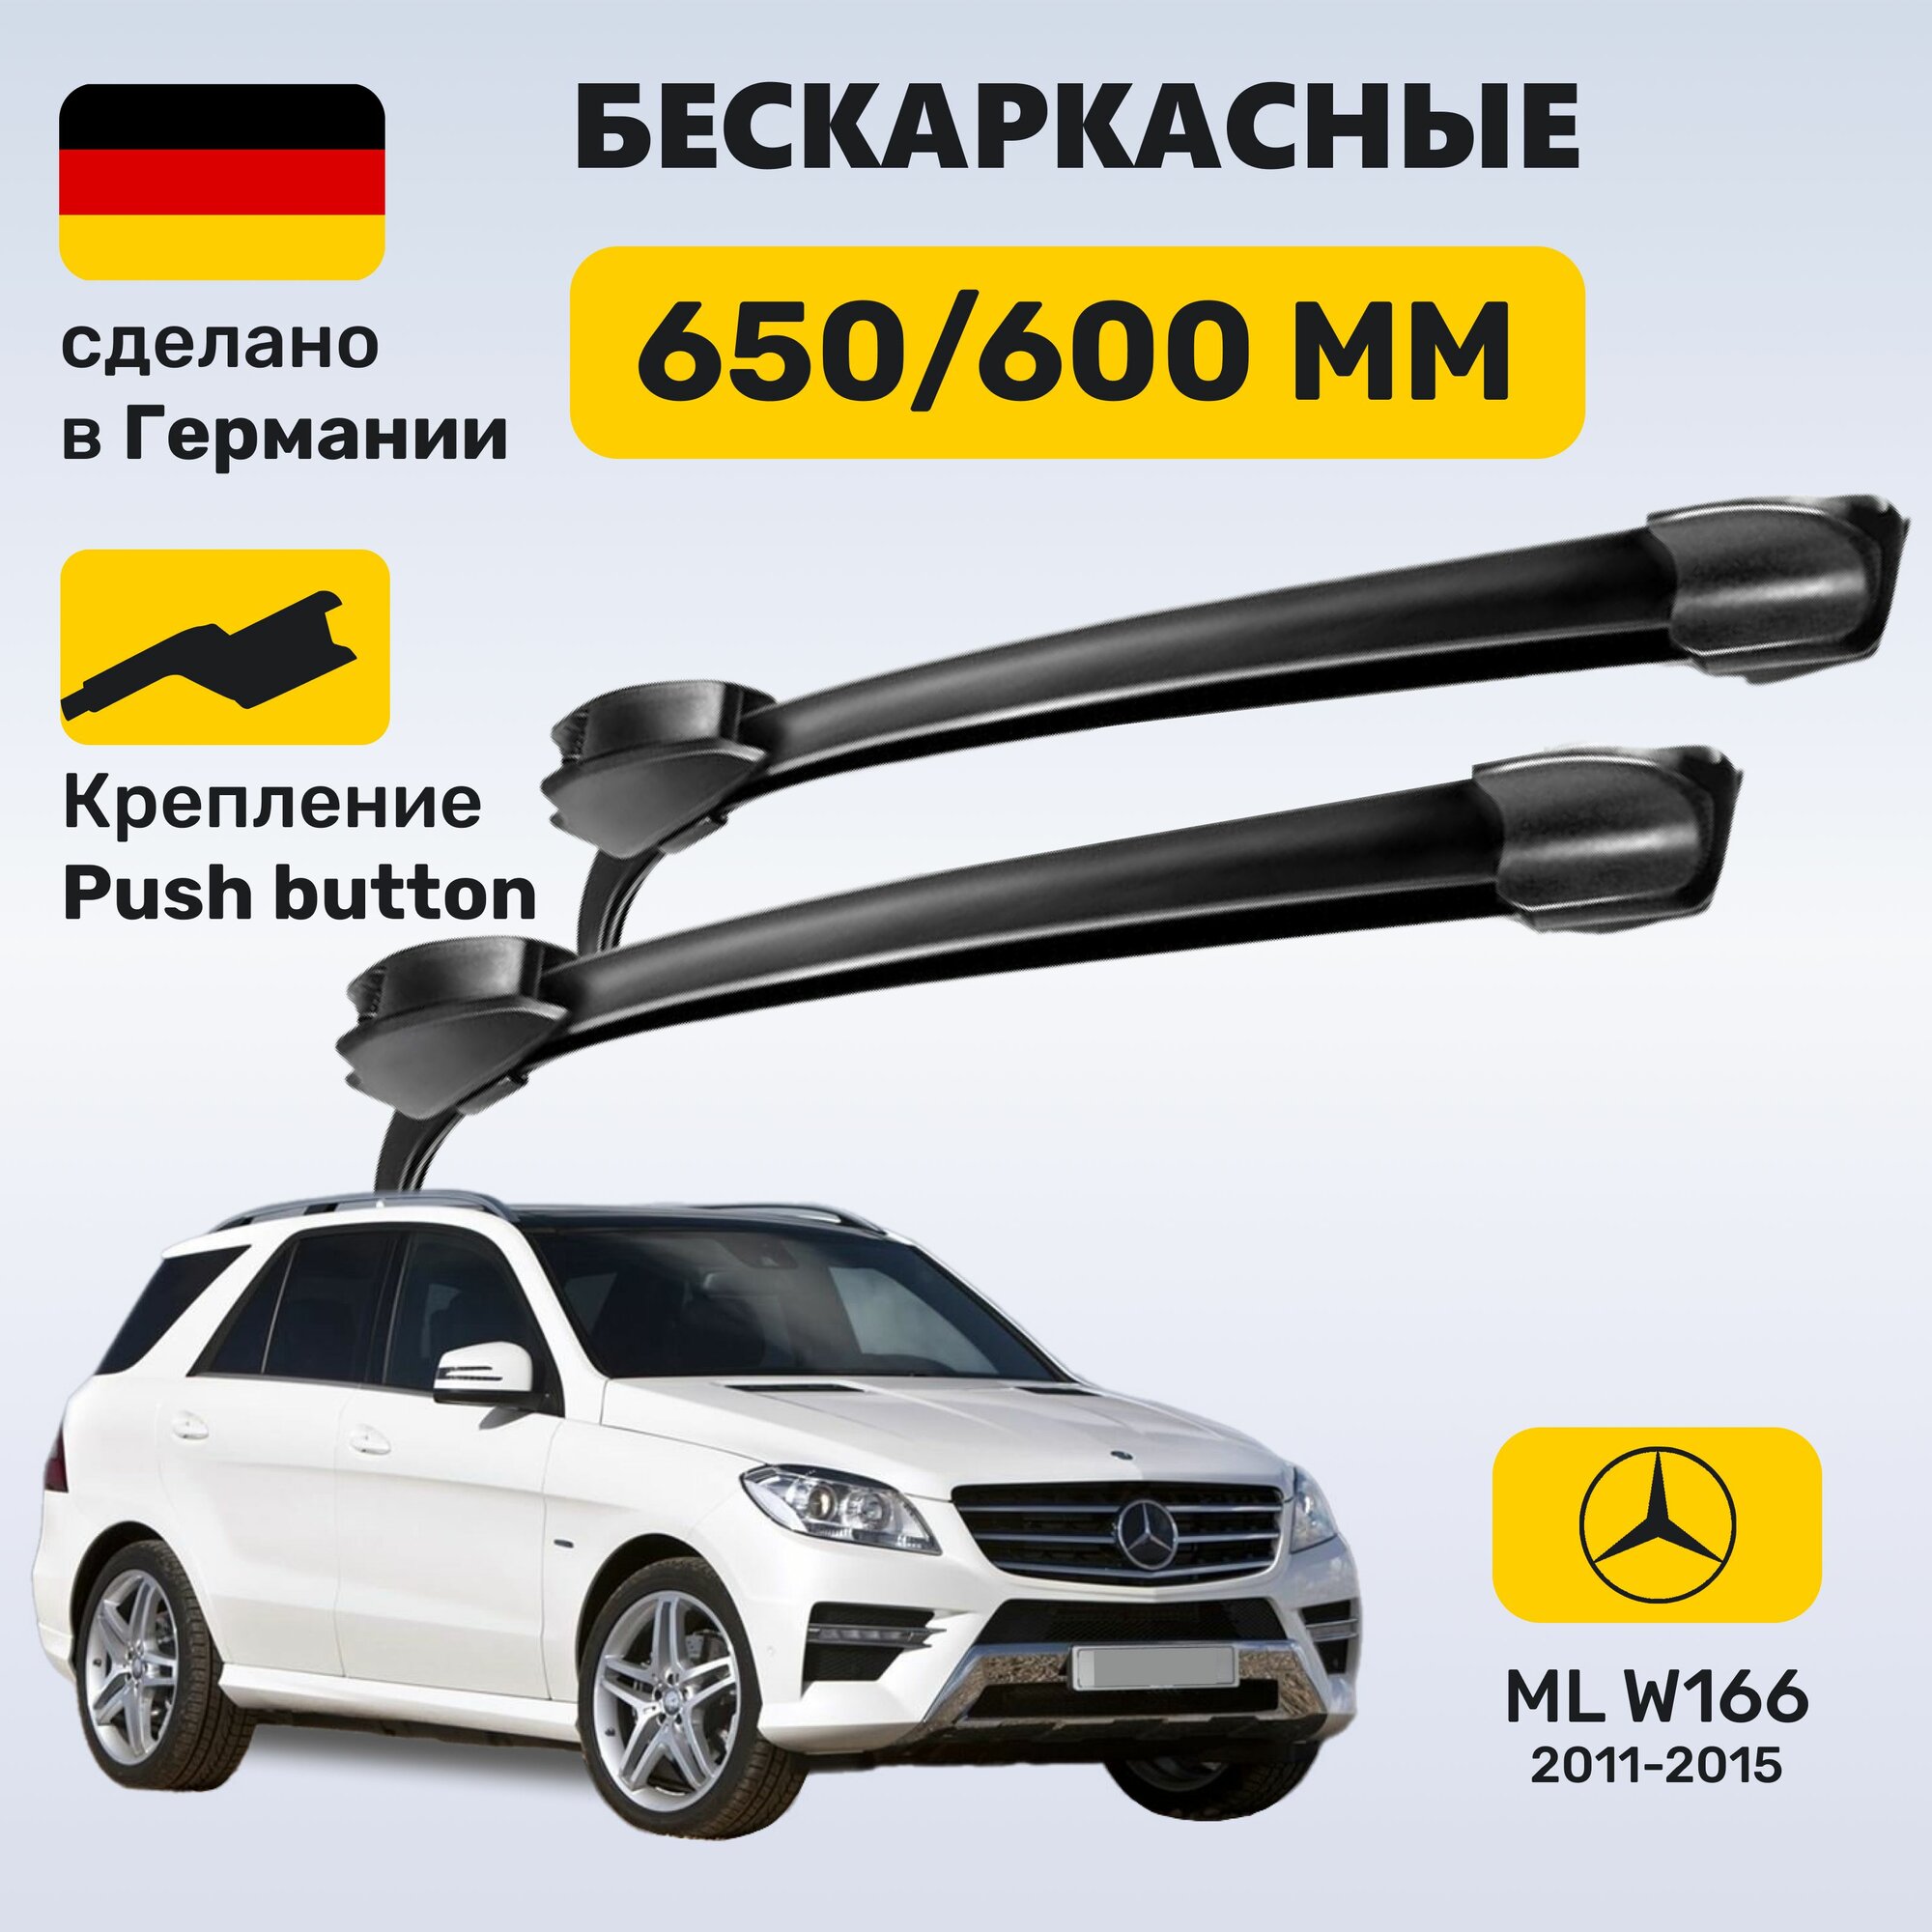 Дворники Мерседес МЛ 166, щетки Mercedes ML W166 (2011-2015)